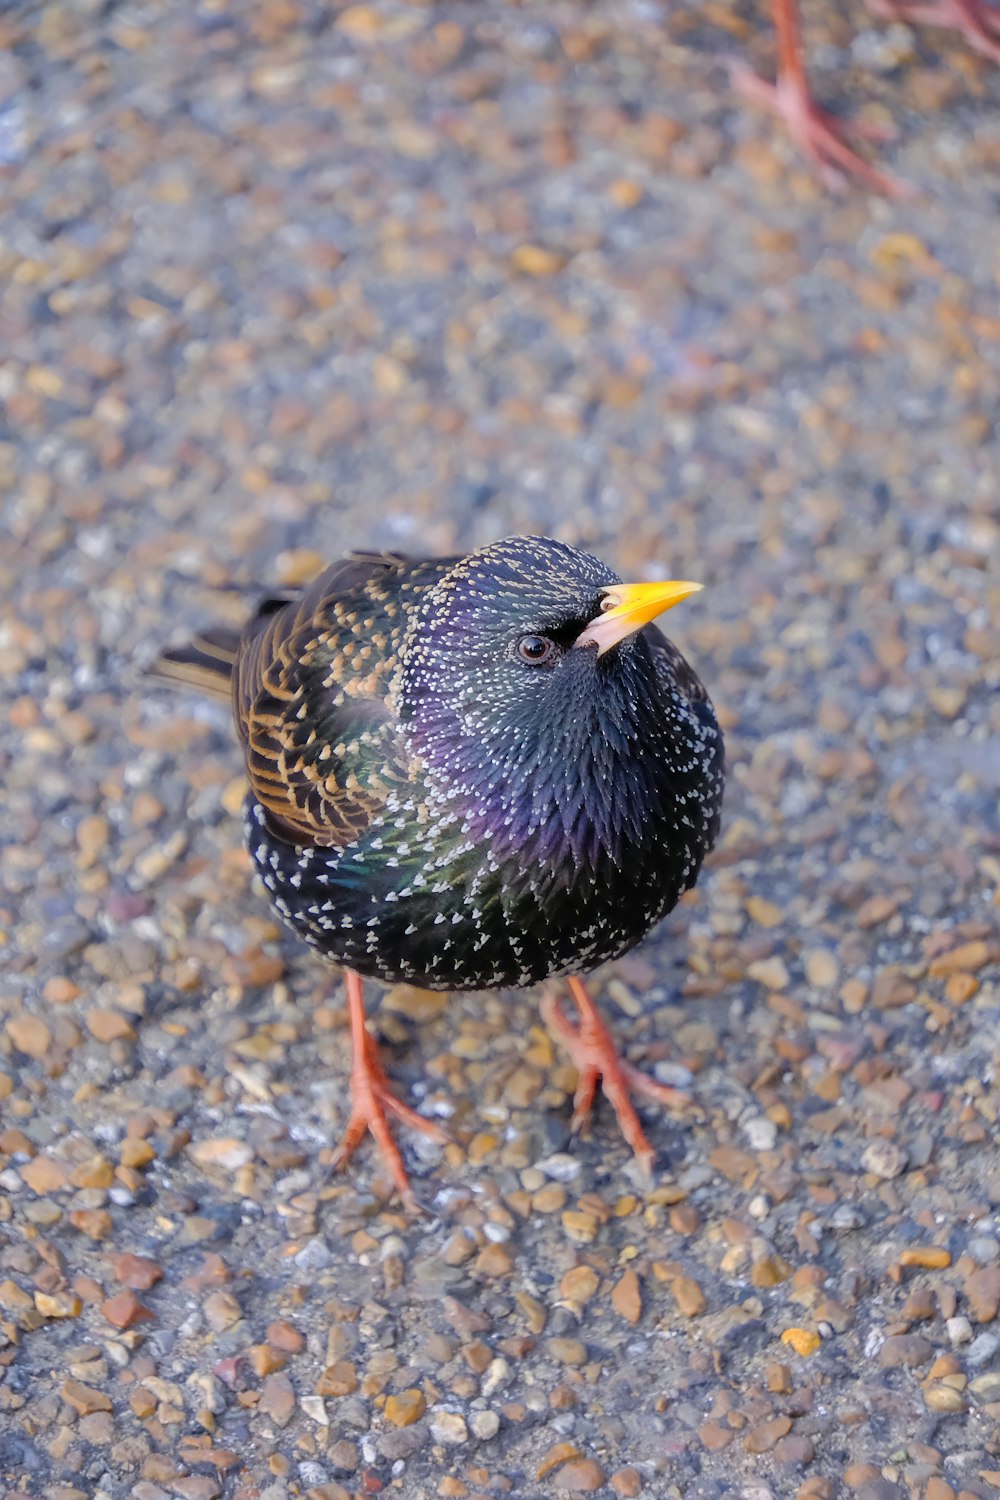 a black bird with a yellow beak standing on gravel